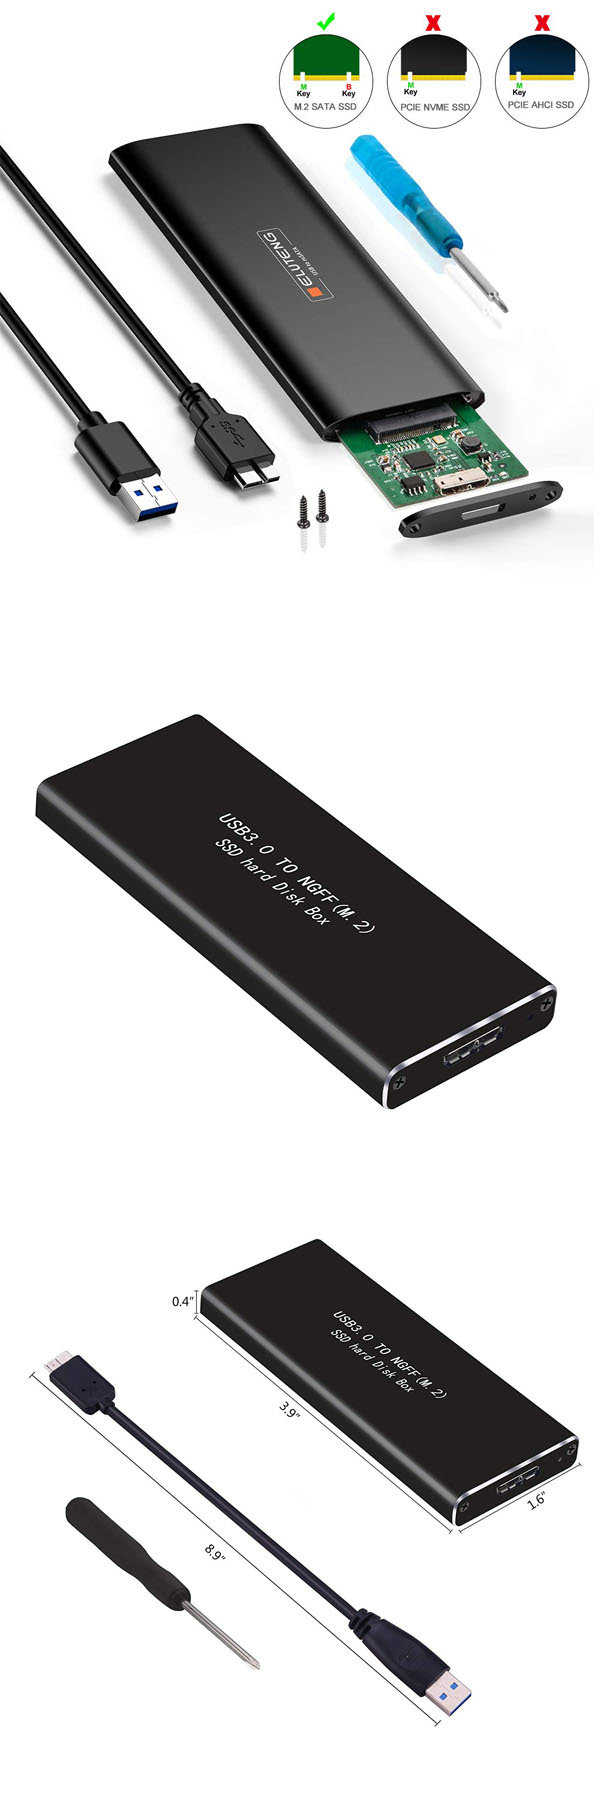 ESTONE M.2 SATA SSD to USB 3.0 External SSD Reader Converter